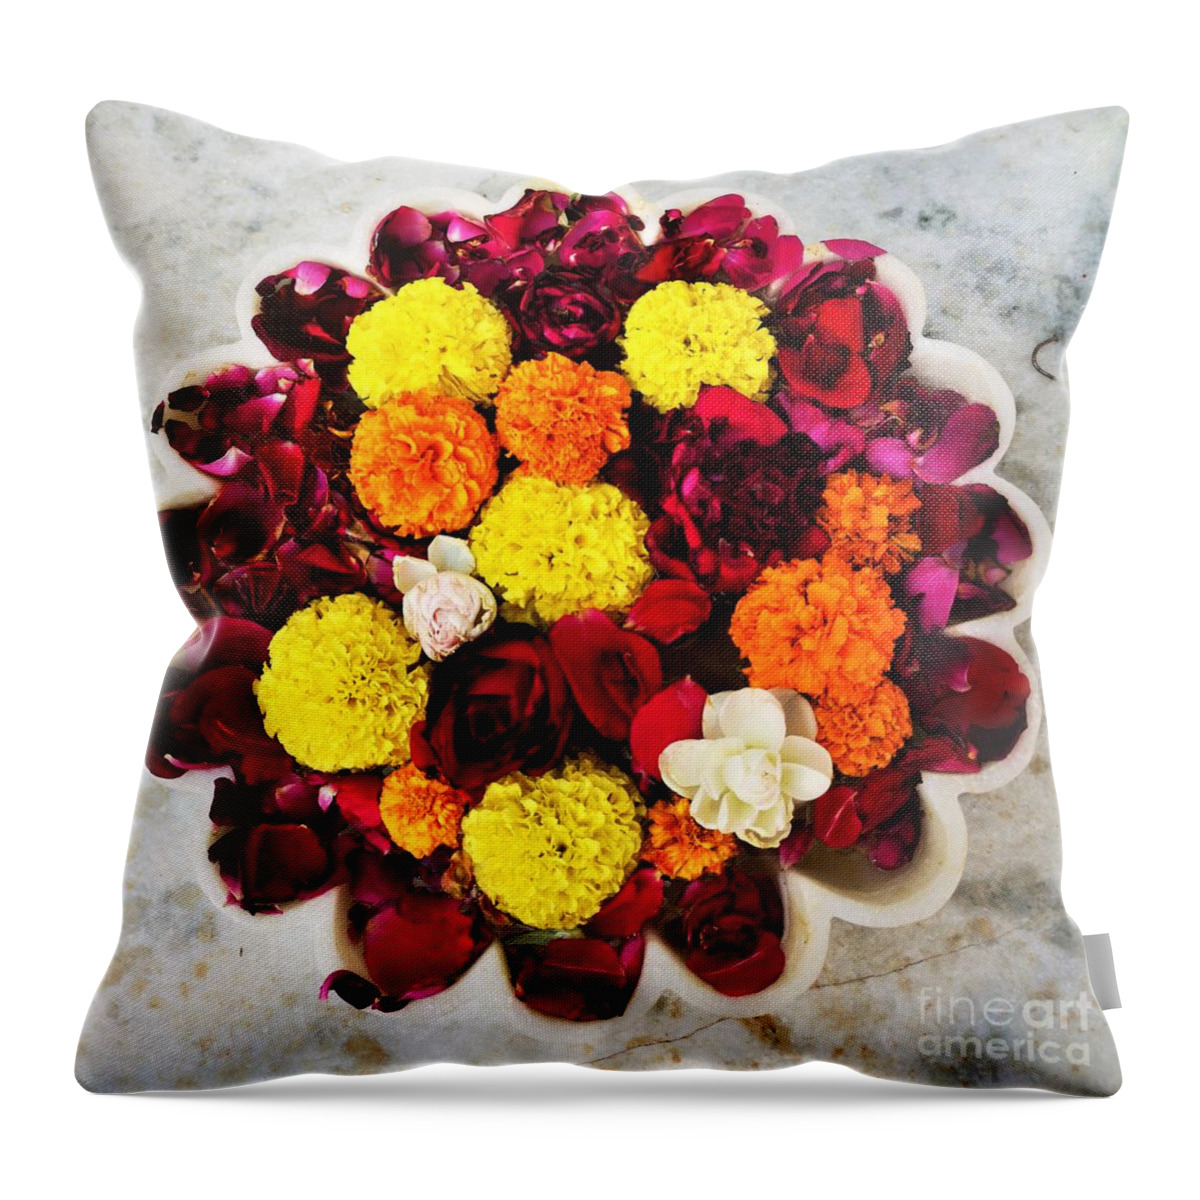 Floral Art Throw Pillow featuring the photograph Flower offering by Jarek Filipowicz